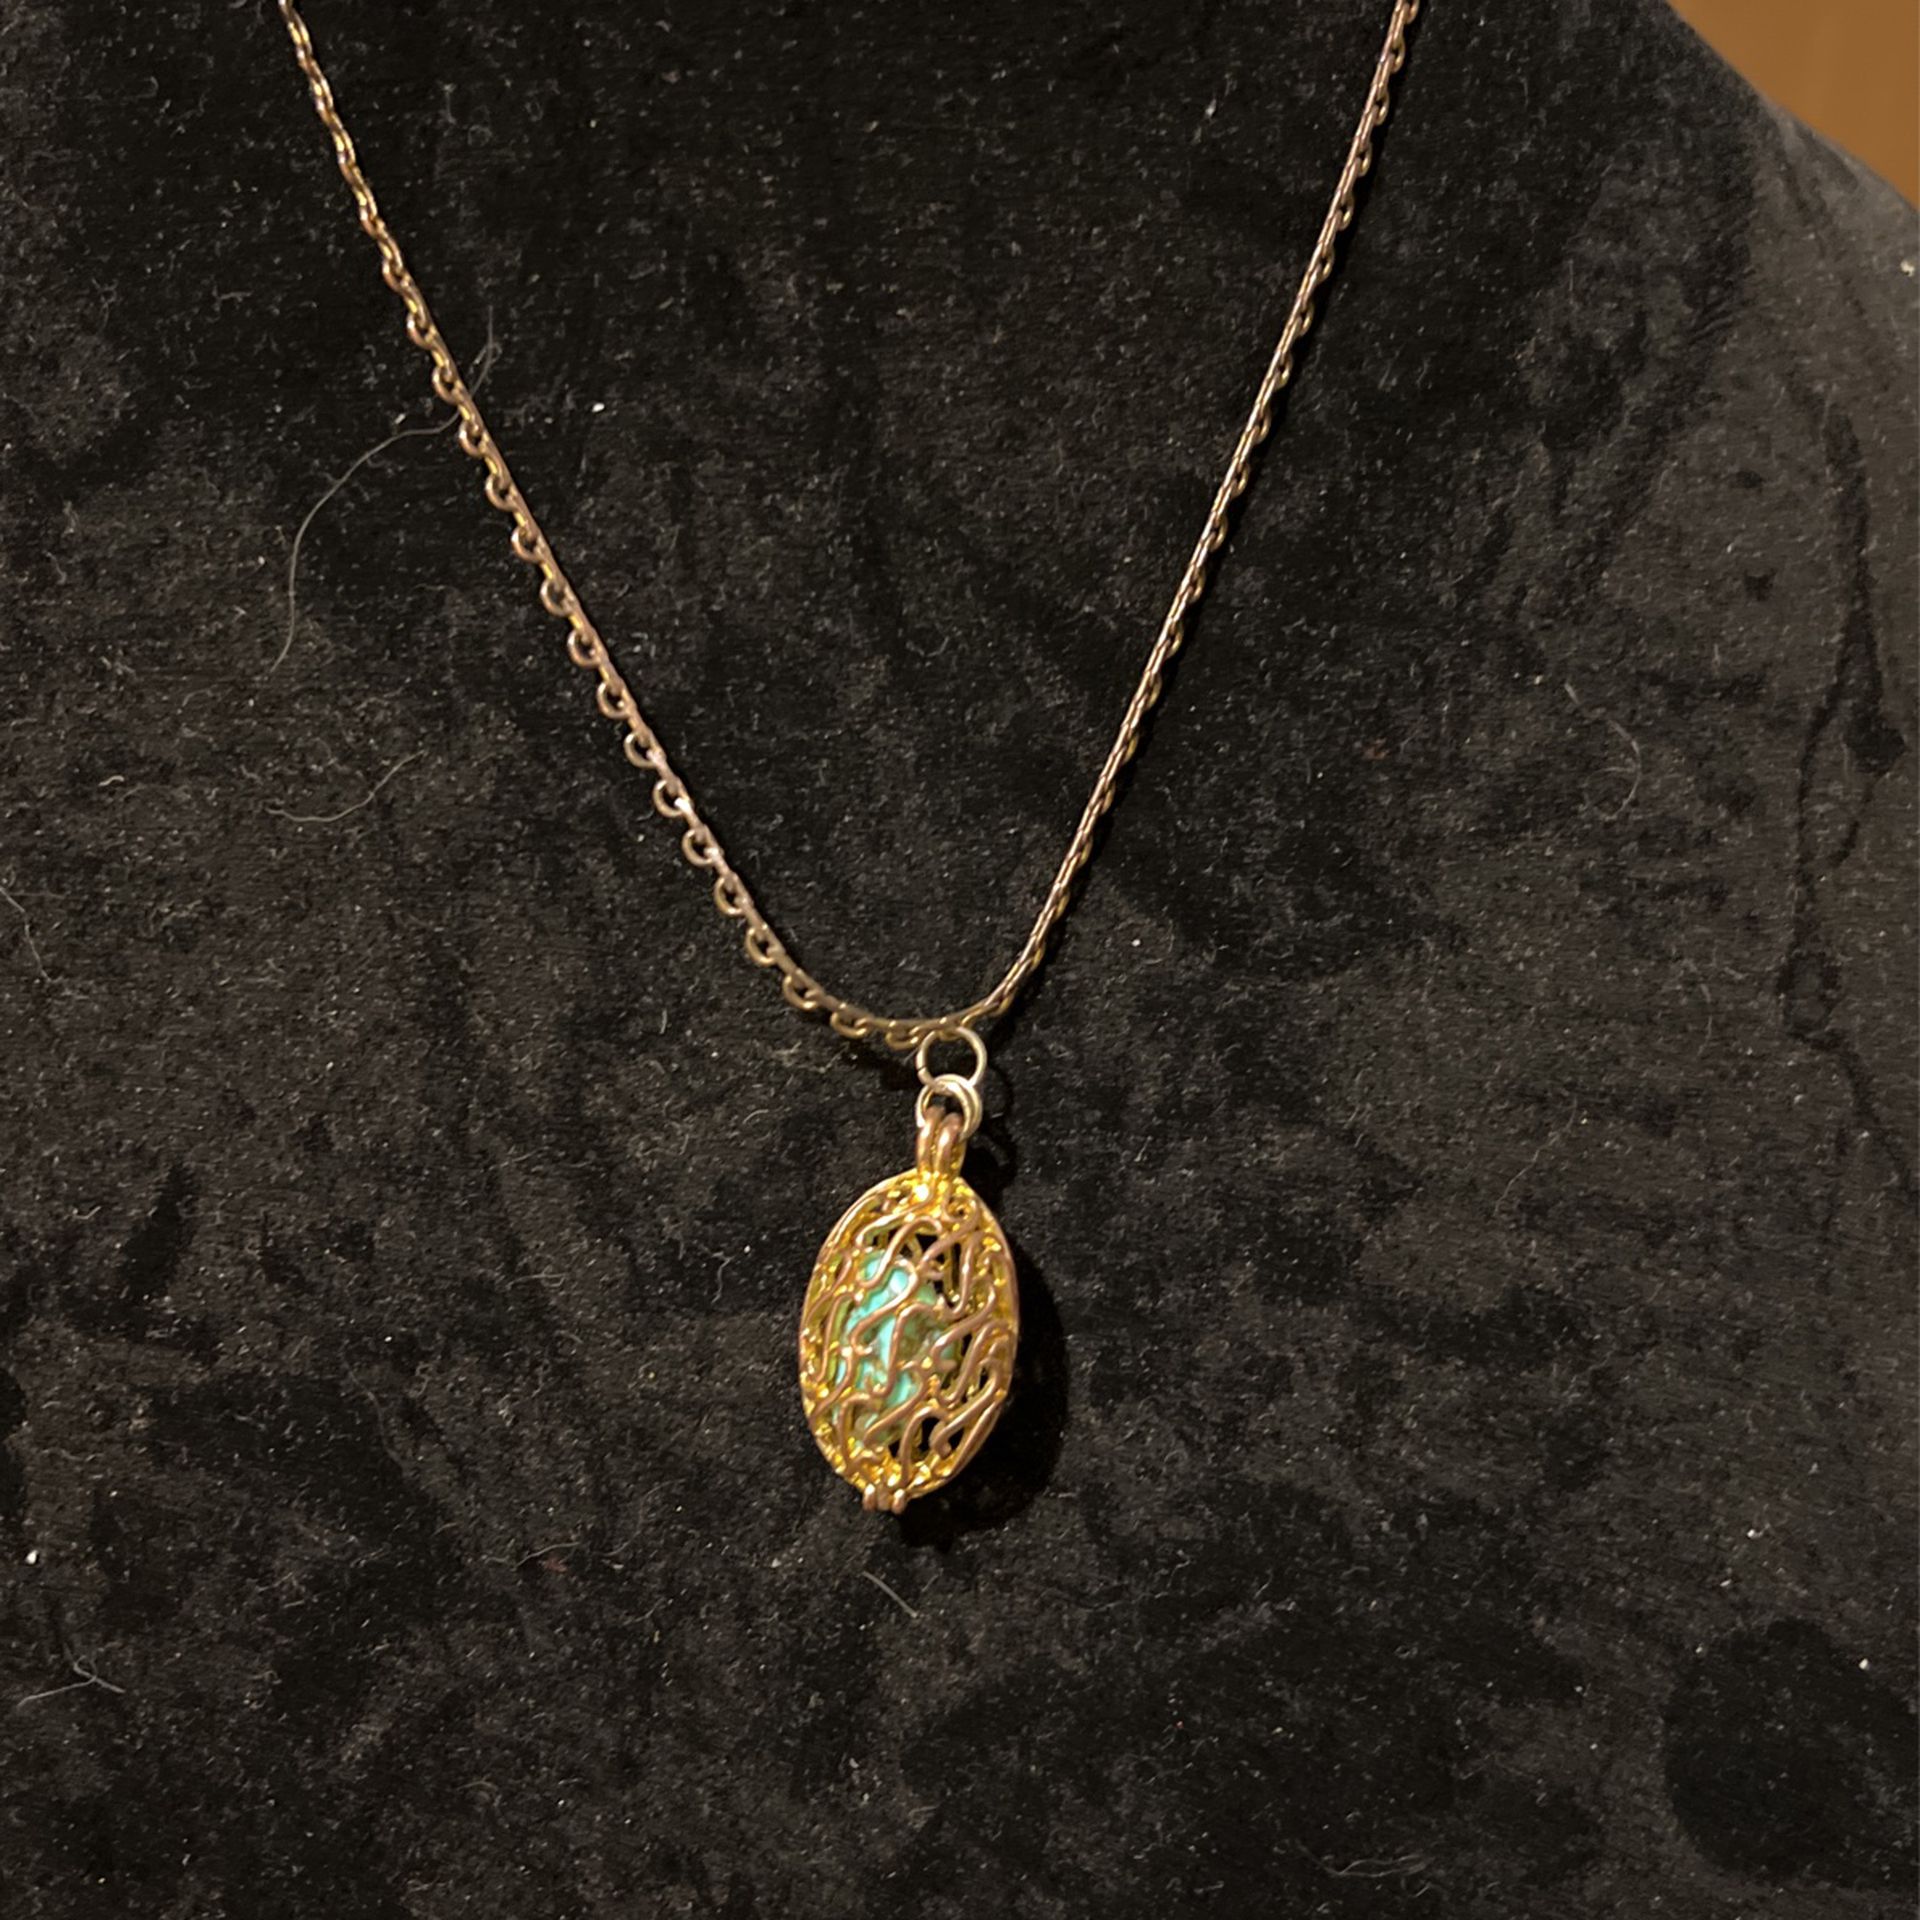 Antique, gold, locket necklace